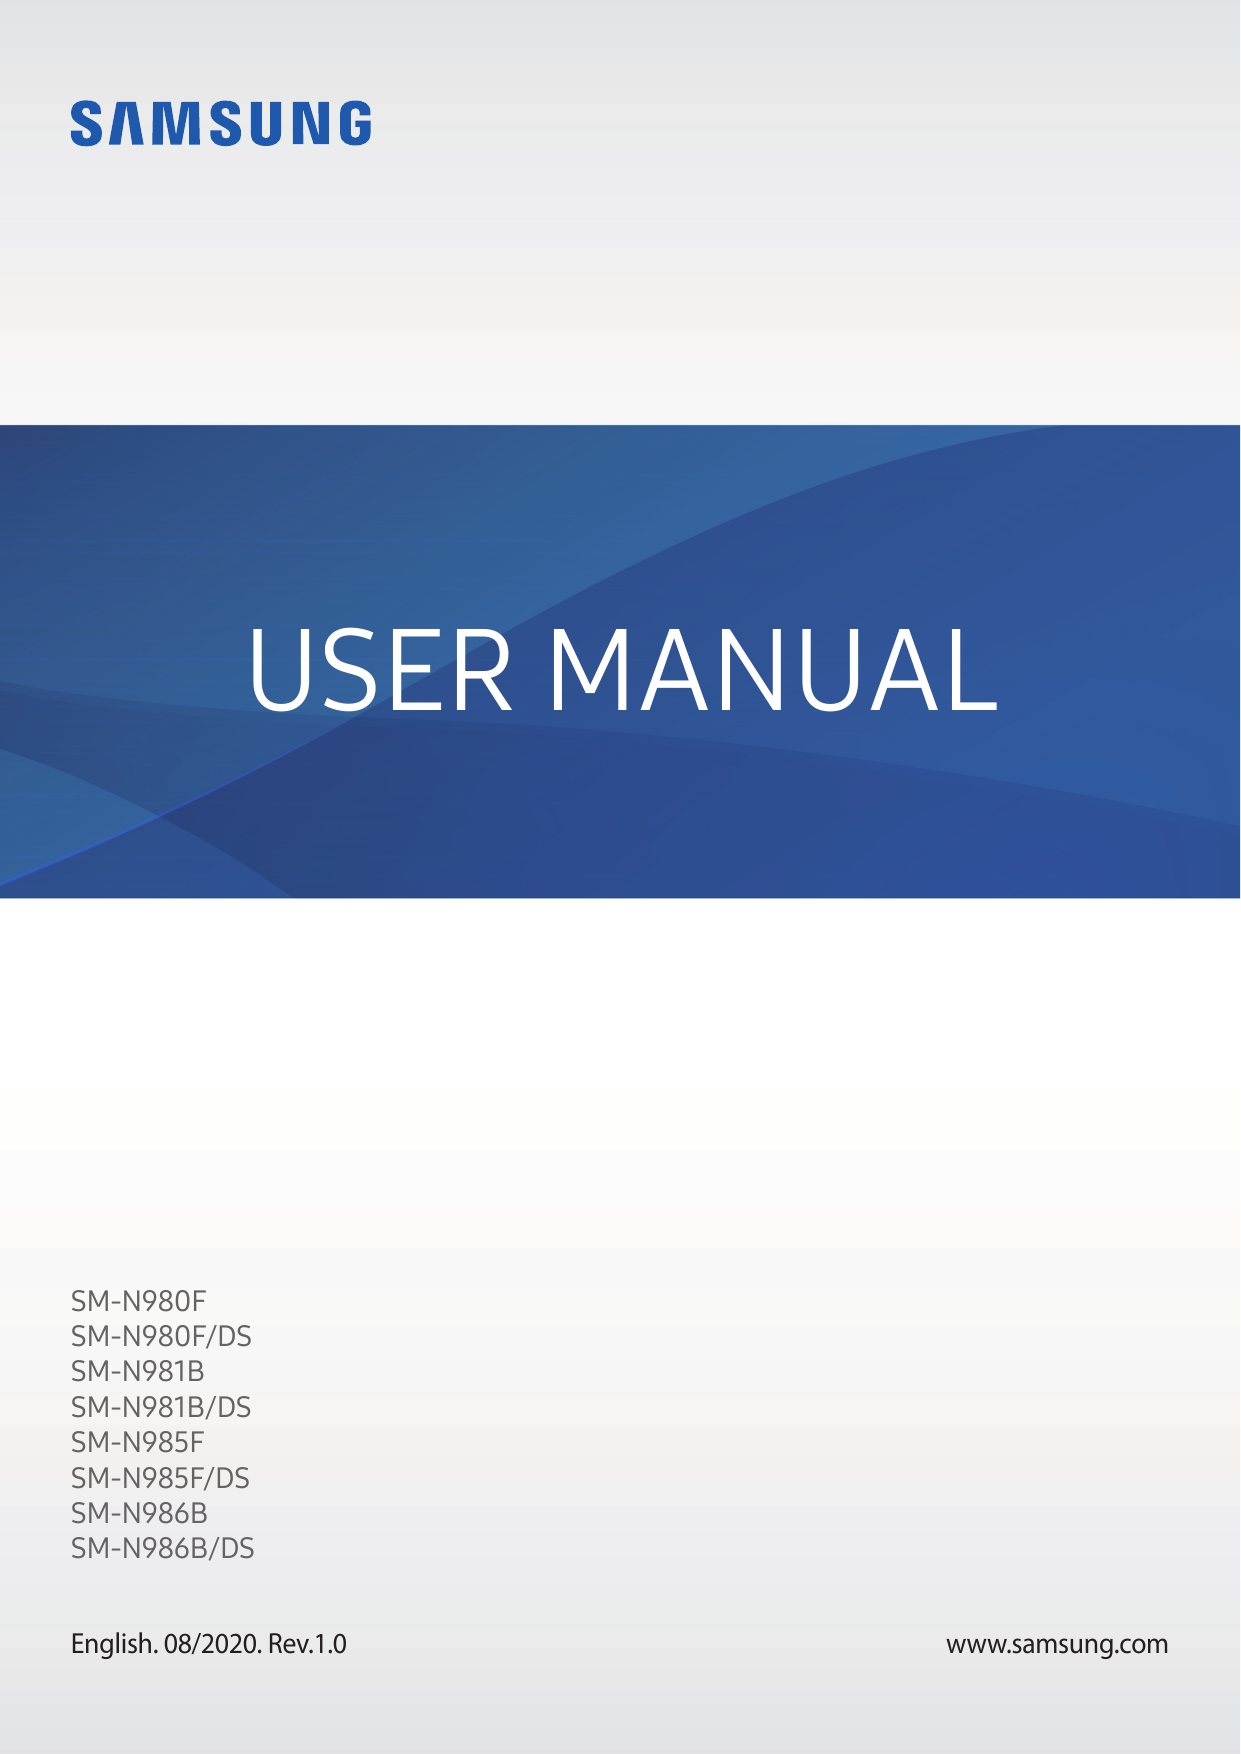 Note20 Ultra 5G SM-N986U1 Support & Manual